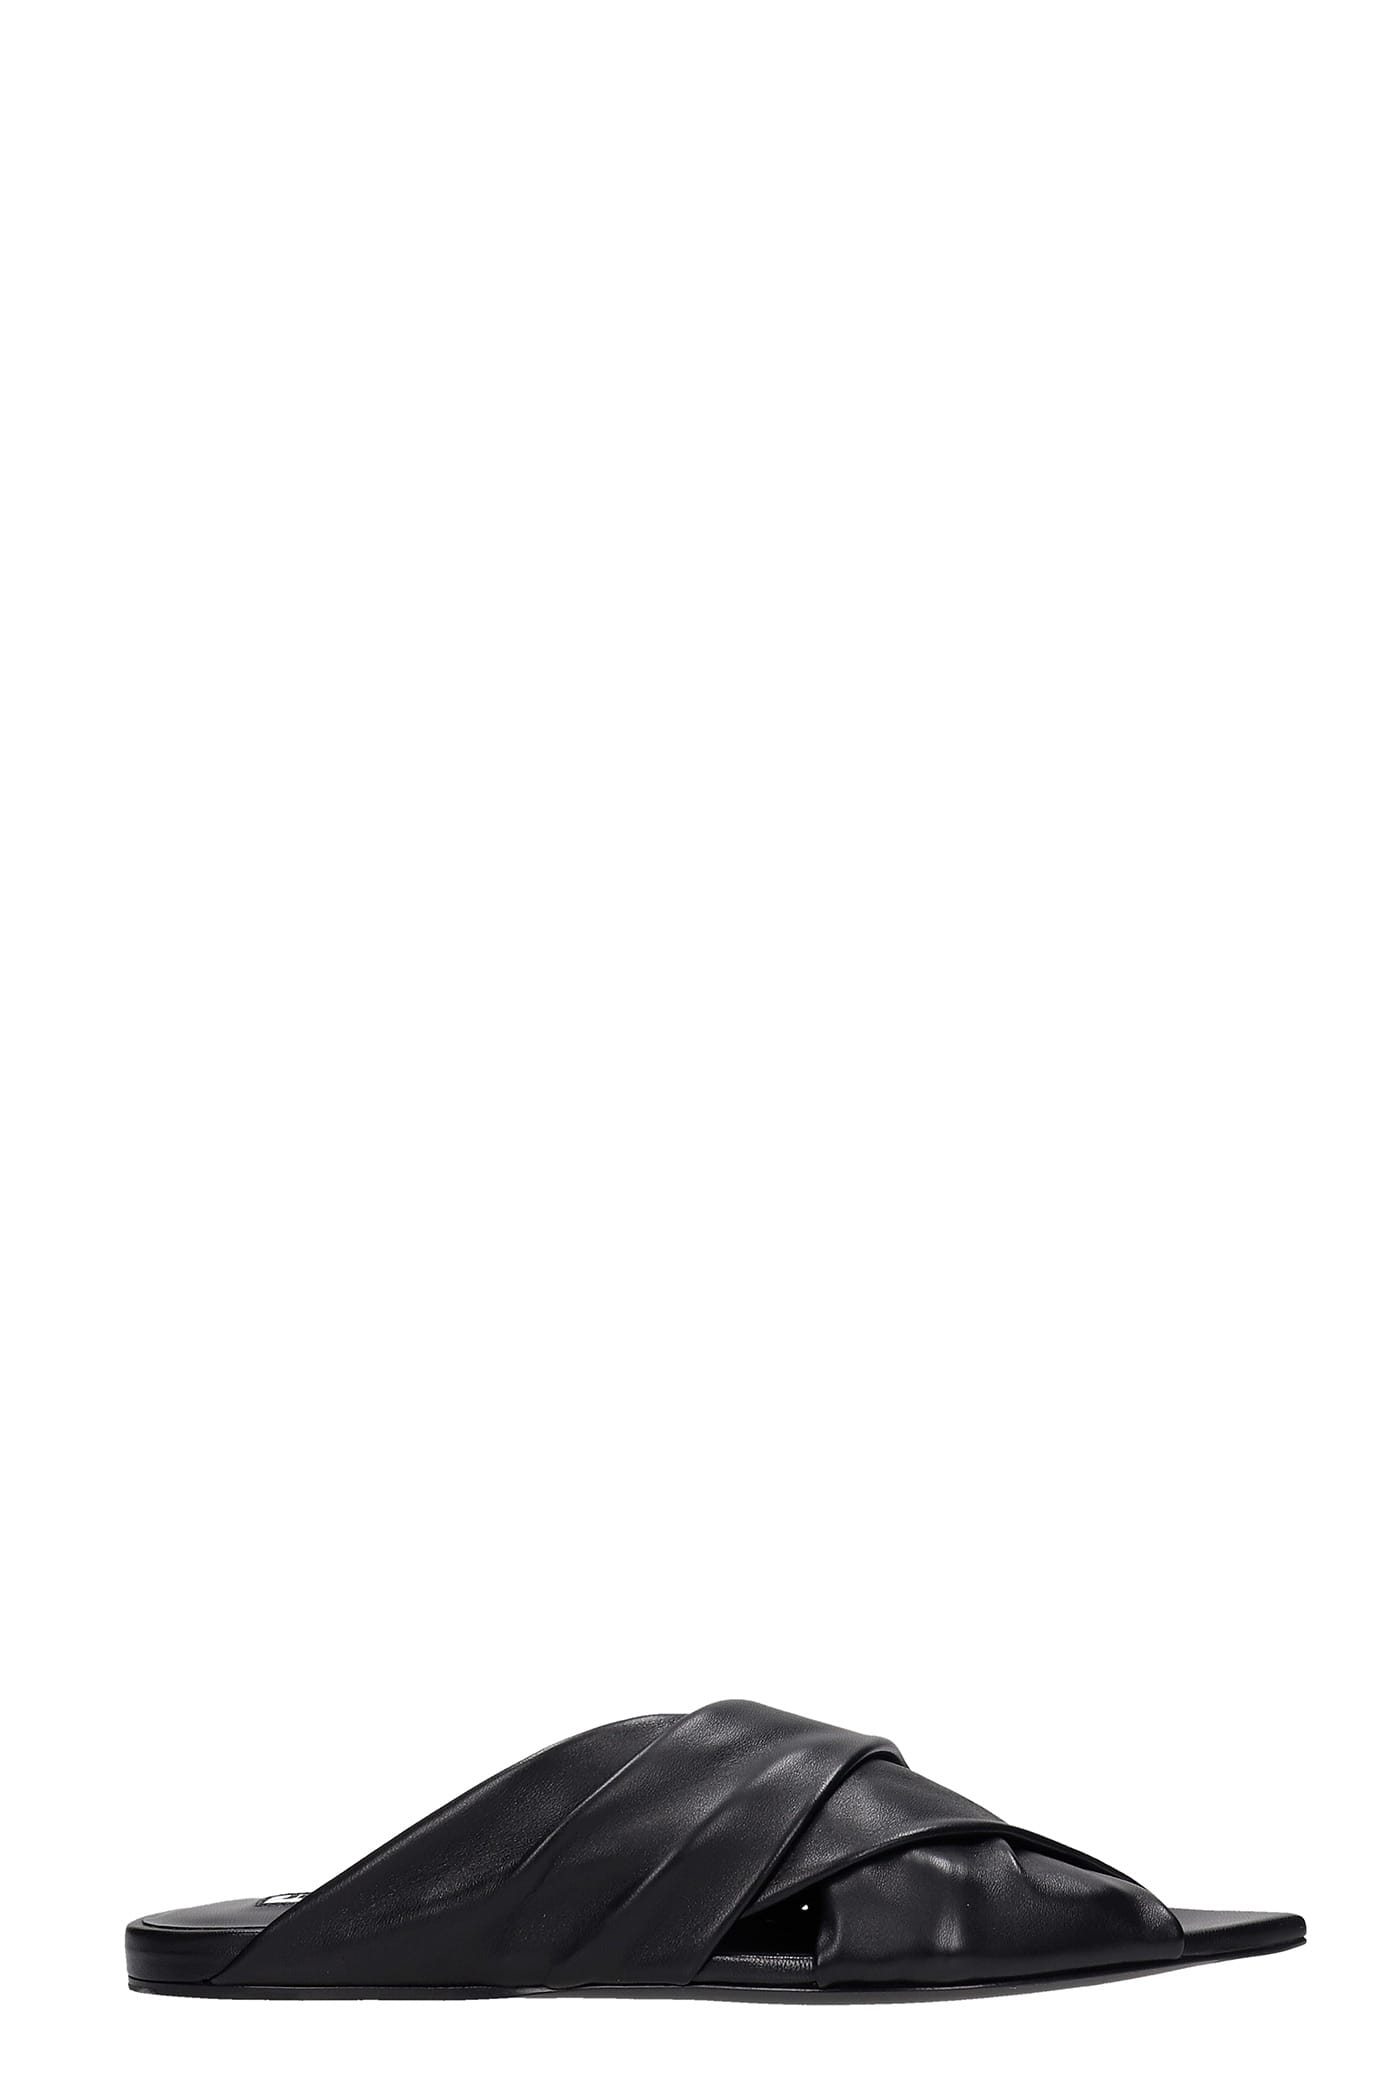 Buy Jil Sander Flats In Black Leather online, shop Jil Sander shoes with free shipping